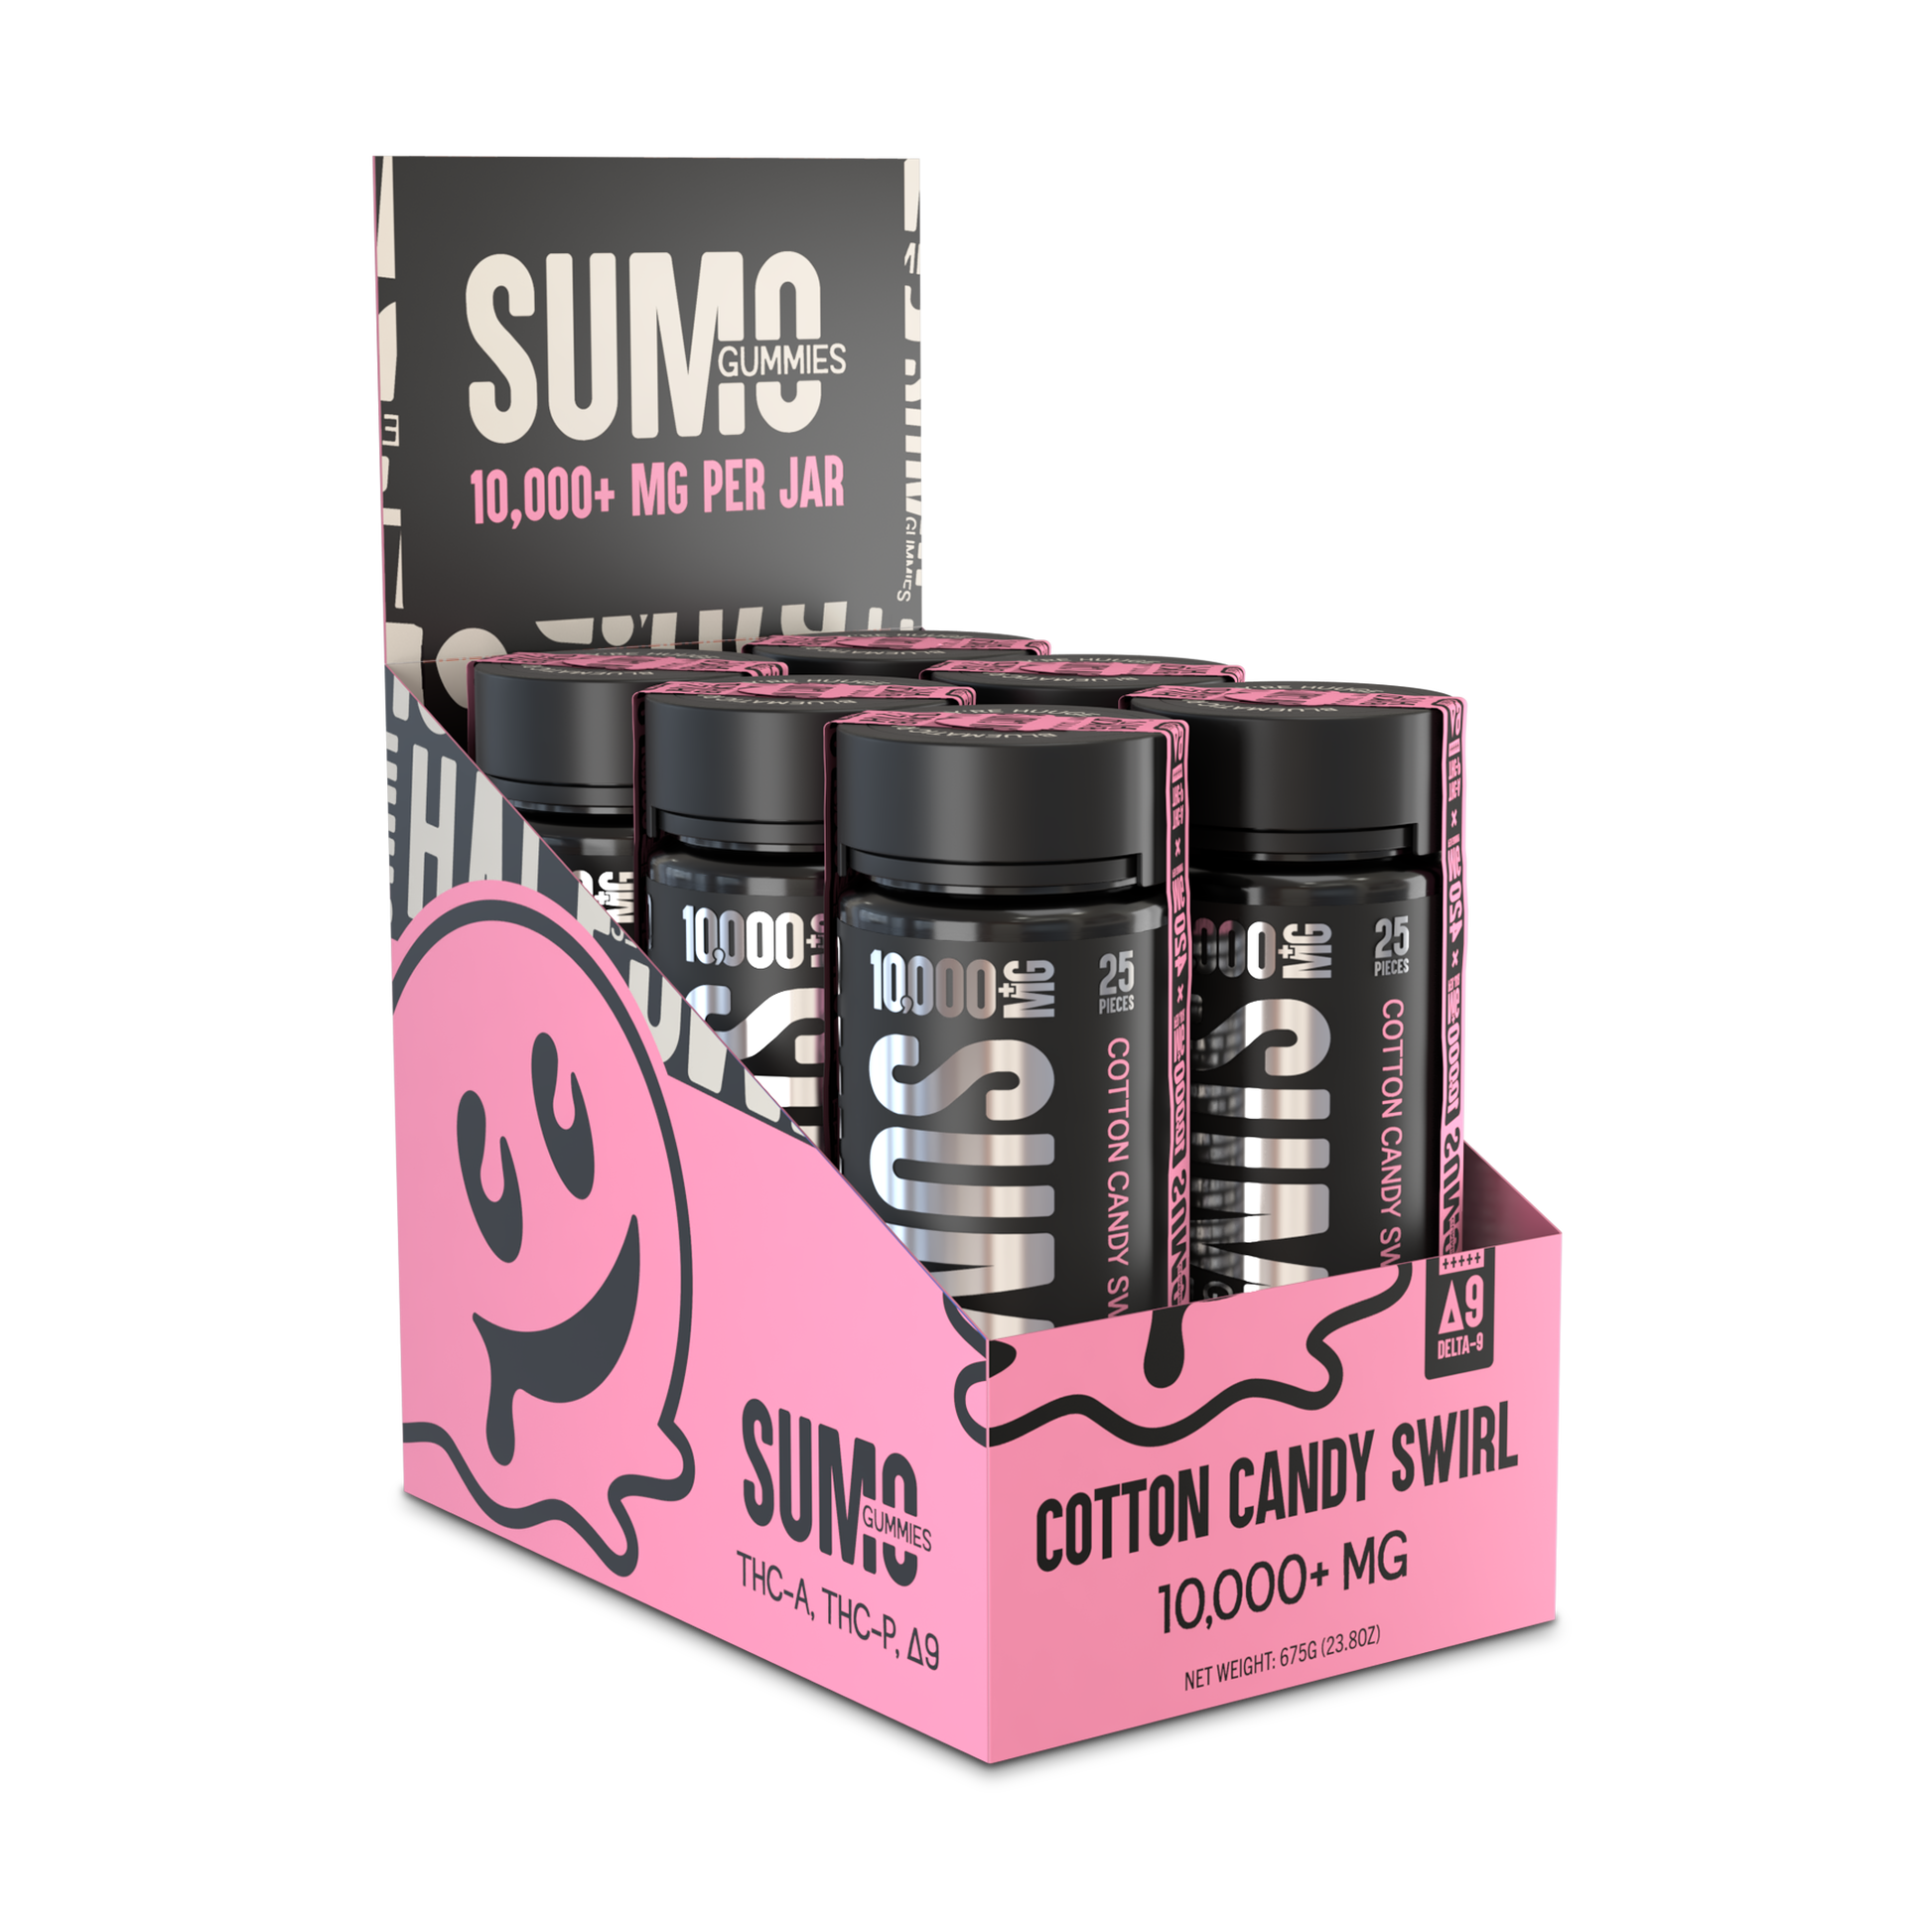 Cotton Candy Swirl 10,000+ MG PER JAR- Sumo Gummies